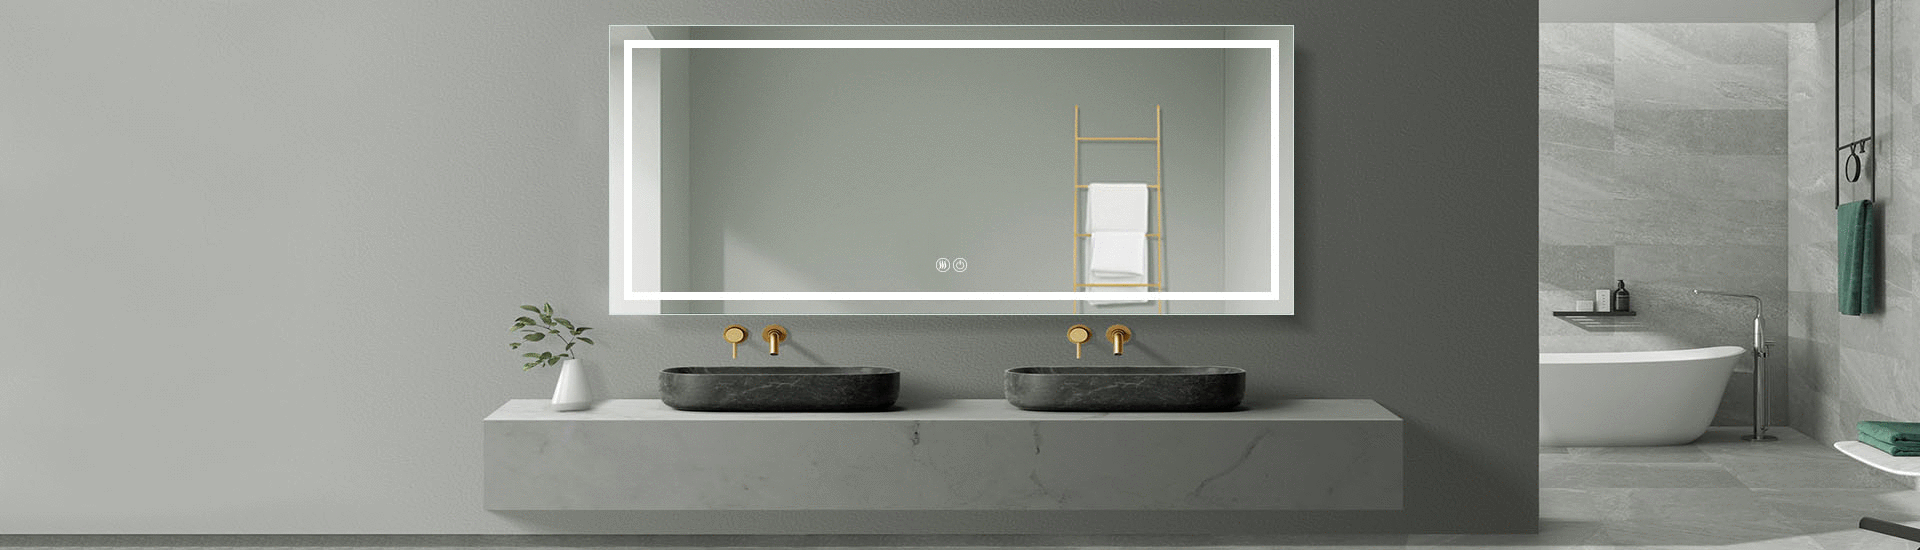 Bathroom Mirror with LED lighting and sensor switchWall Mirror-Osaka K03 